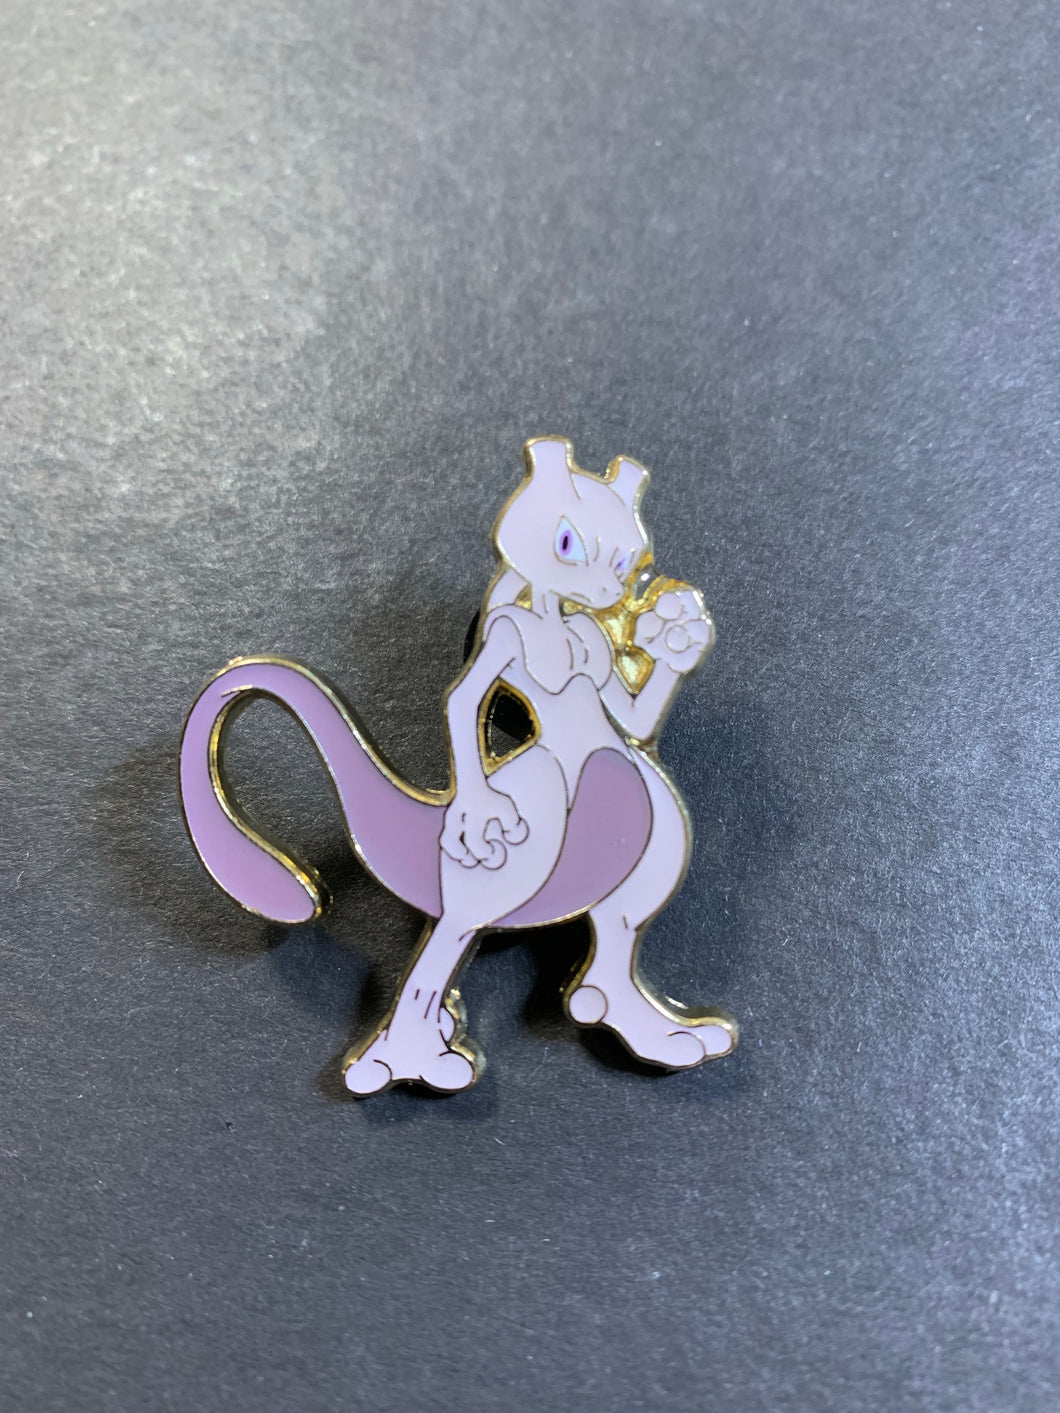 Official Mewtwo Metal Pokemon Pin